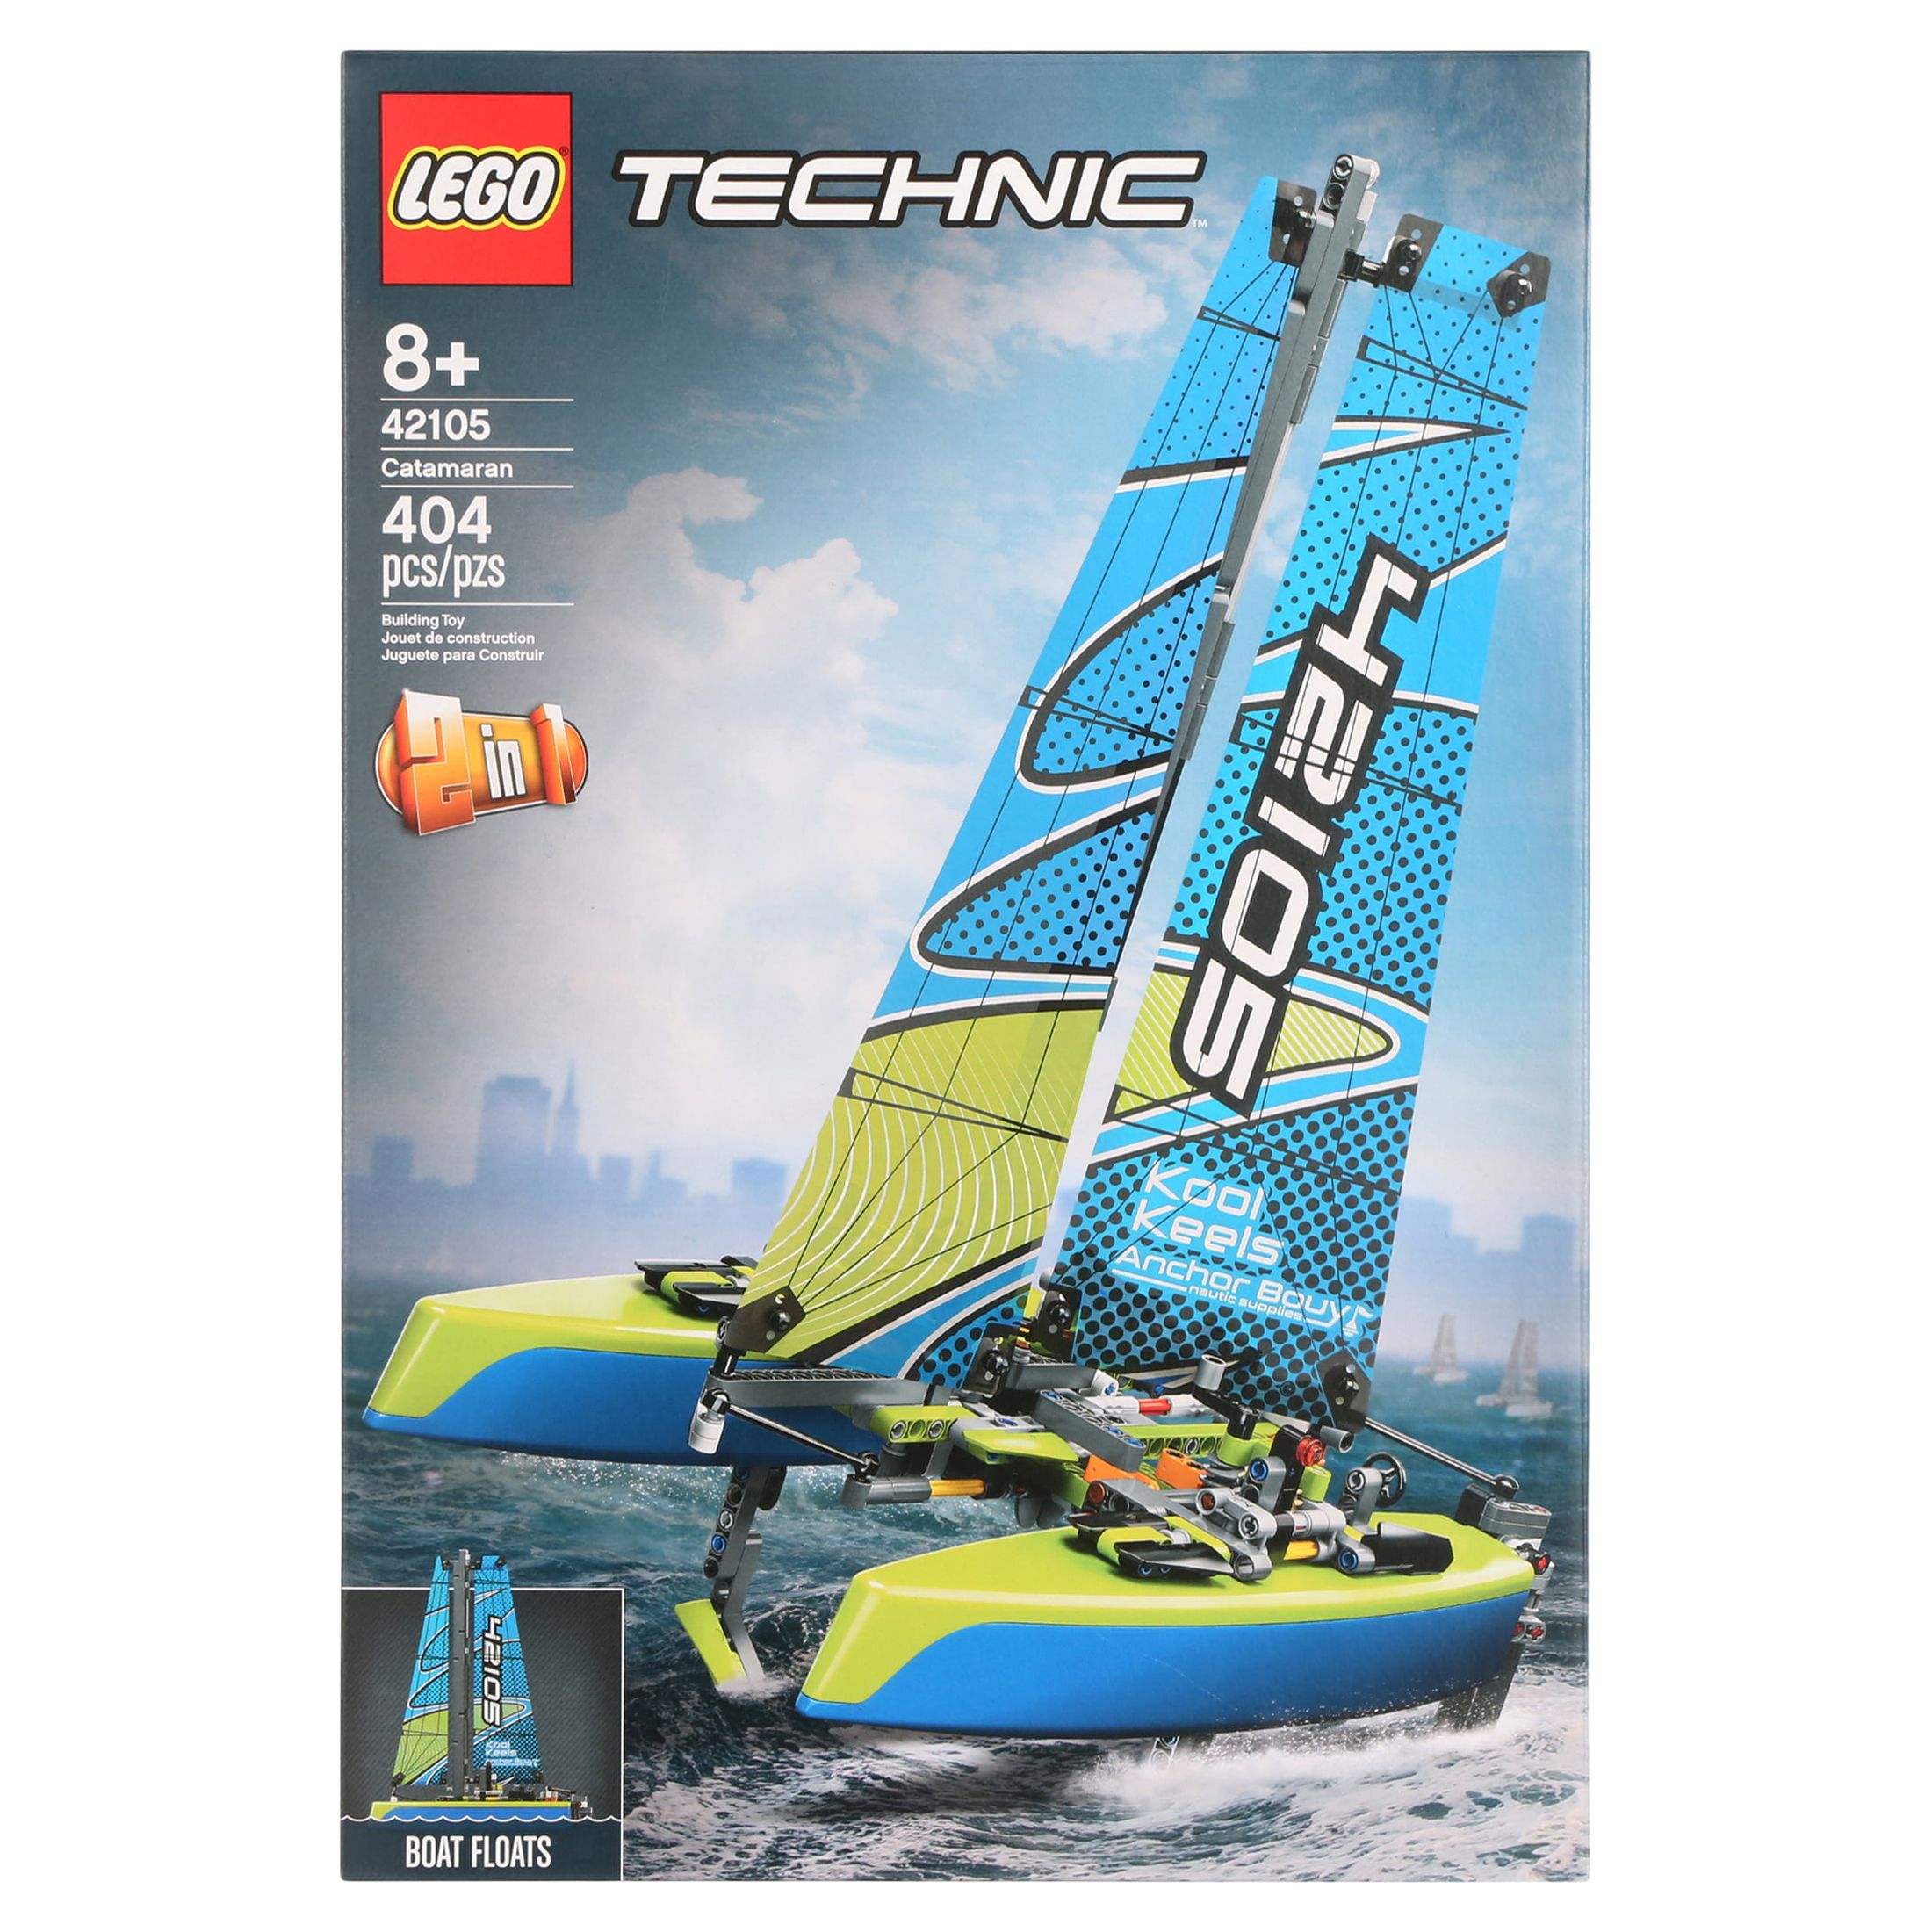 LEGO Technic Catamaran 42105 Model Sailboat Building Kit (404 pieces) - image 3 of 10